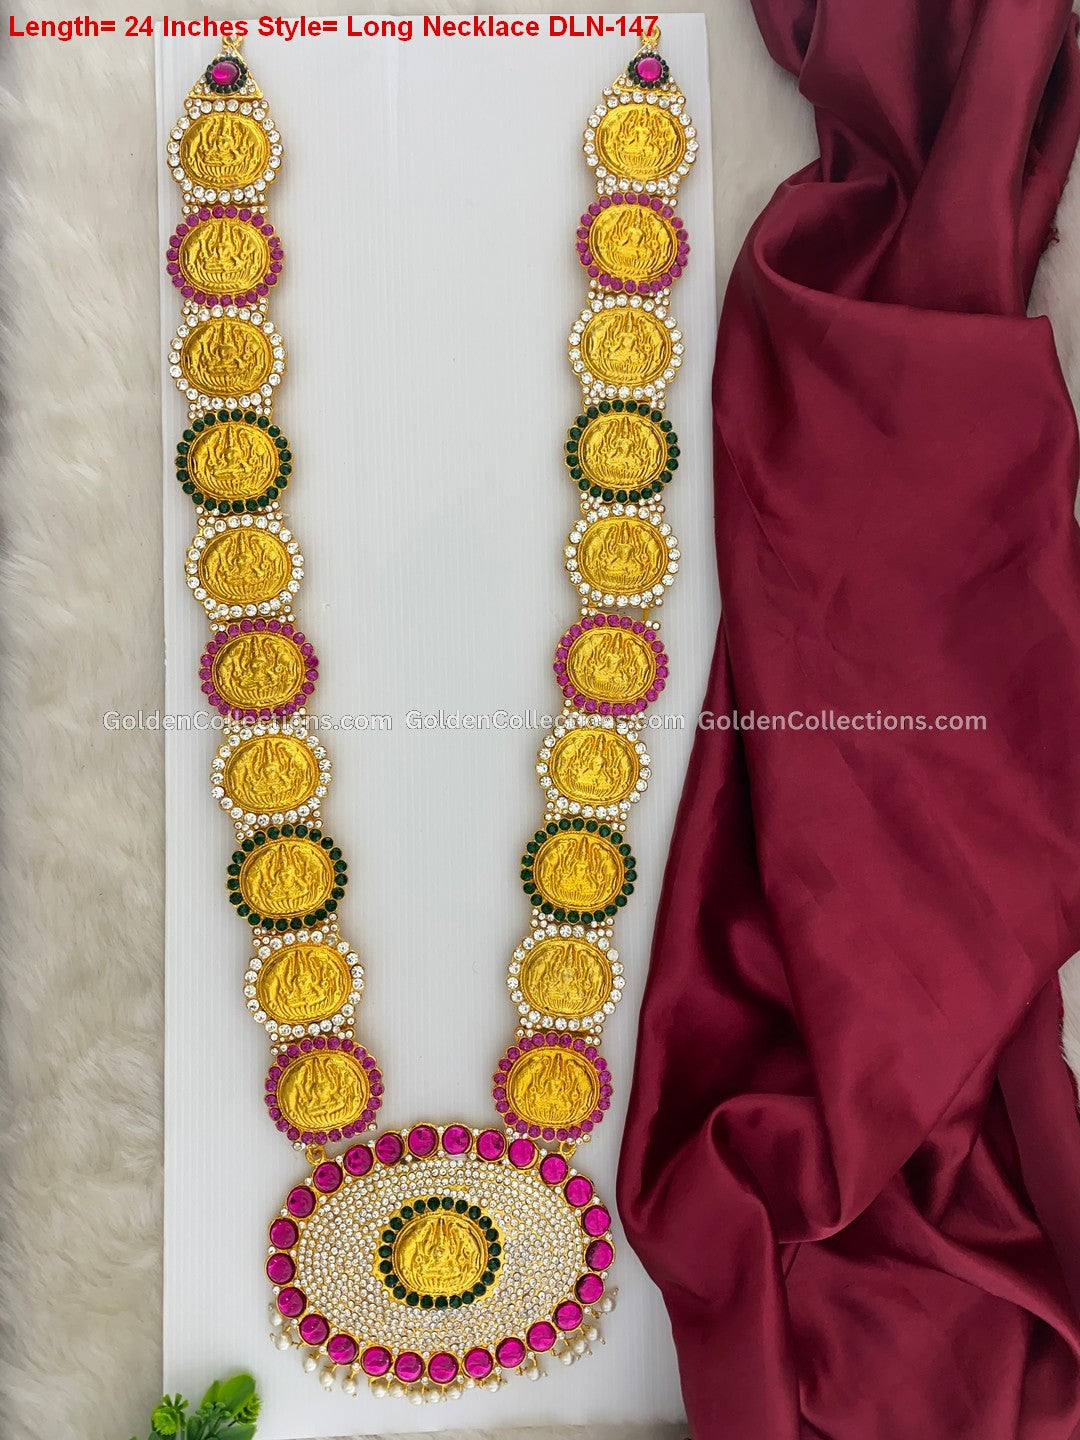 Intricate Divine Lakshmi Jewellery - DLN-147